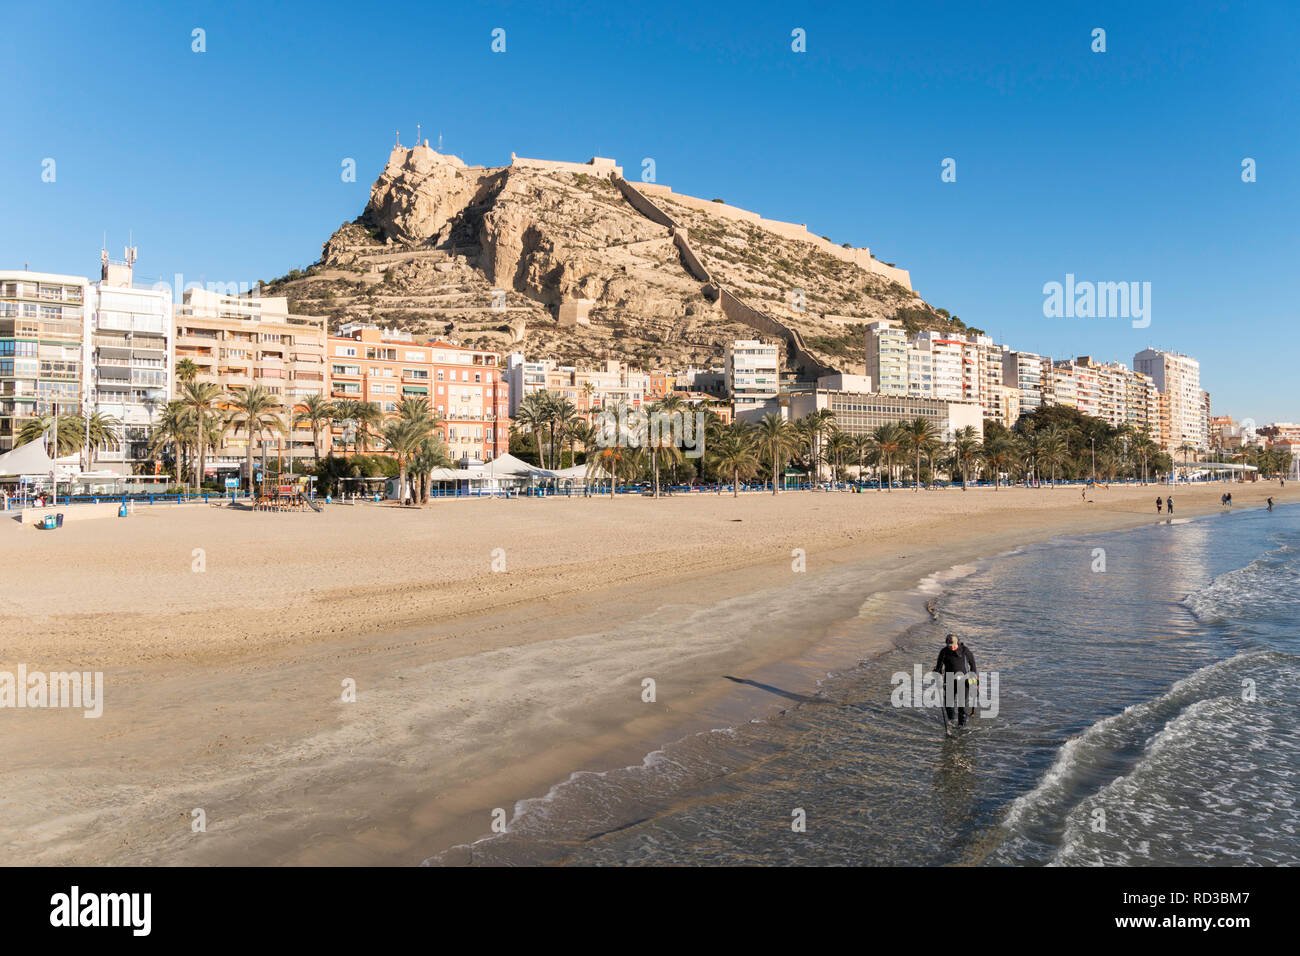 Man using metal detector along the beach in Alicante, Spain, Europe Stock Photo